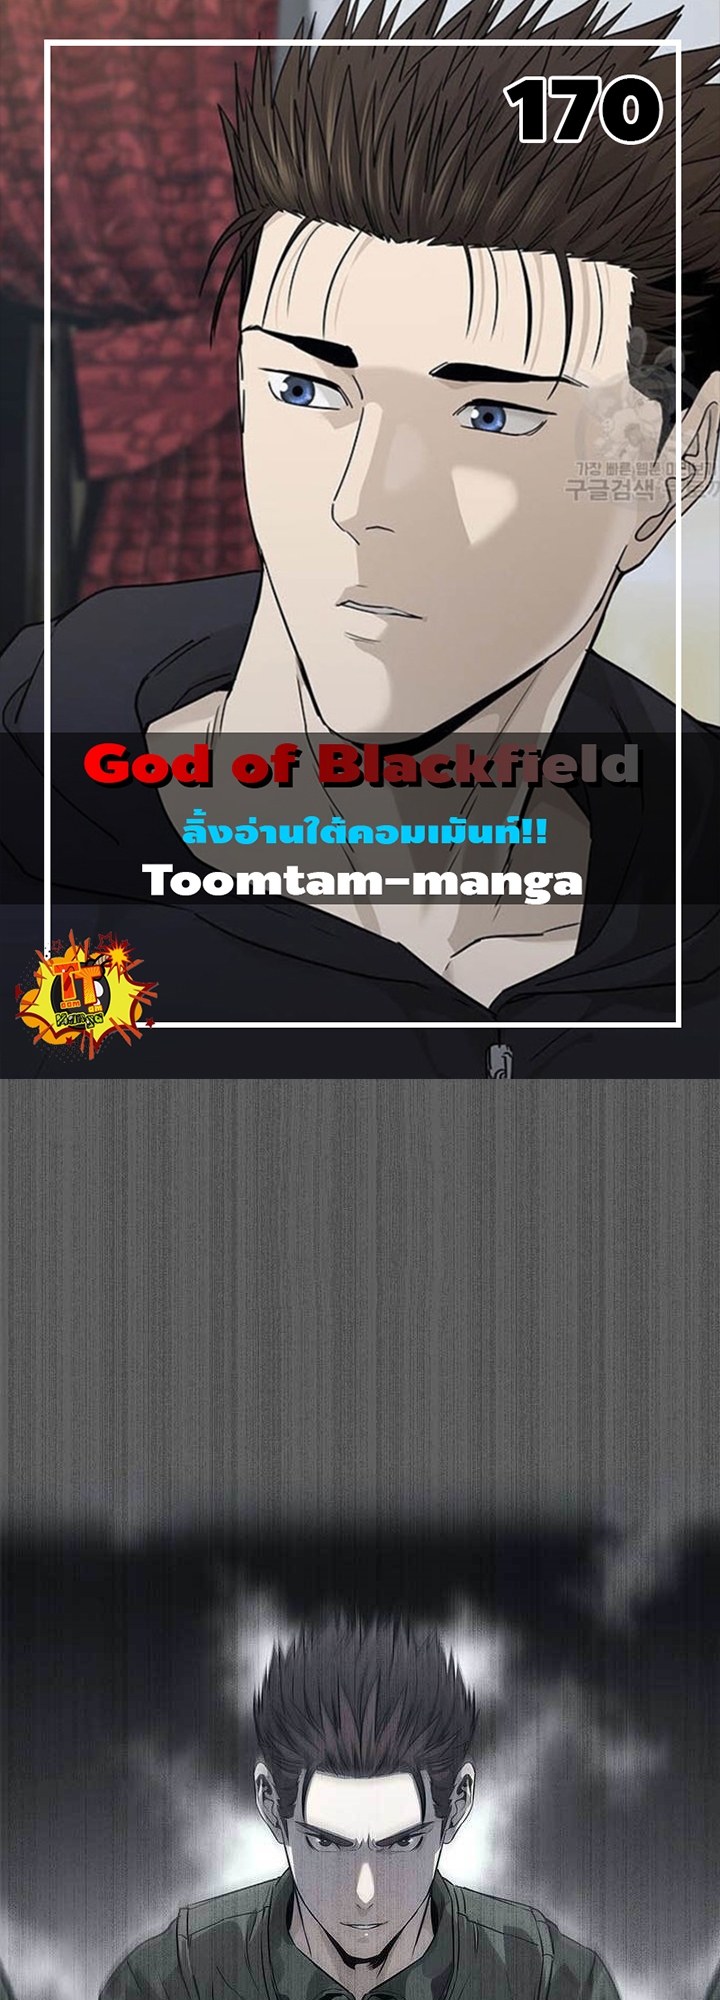 God of Blackfield 170 13 09 660001